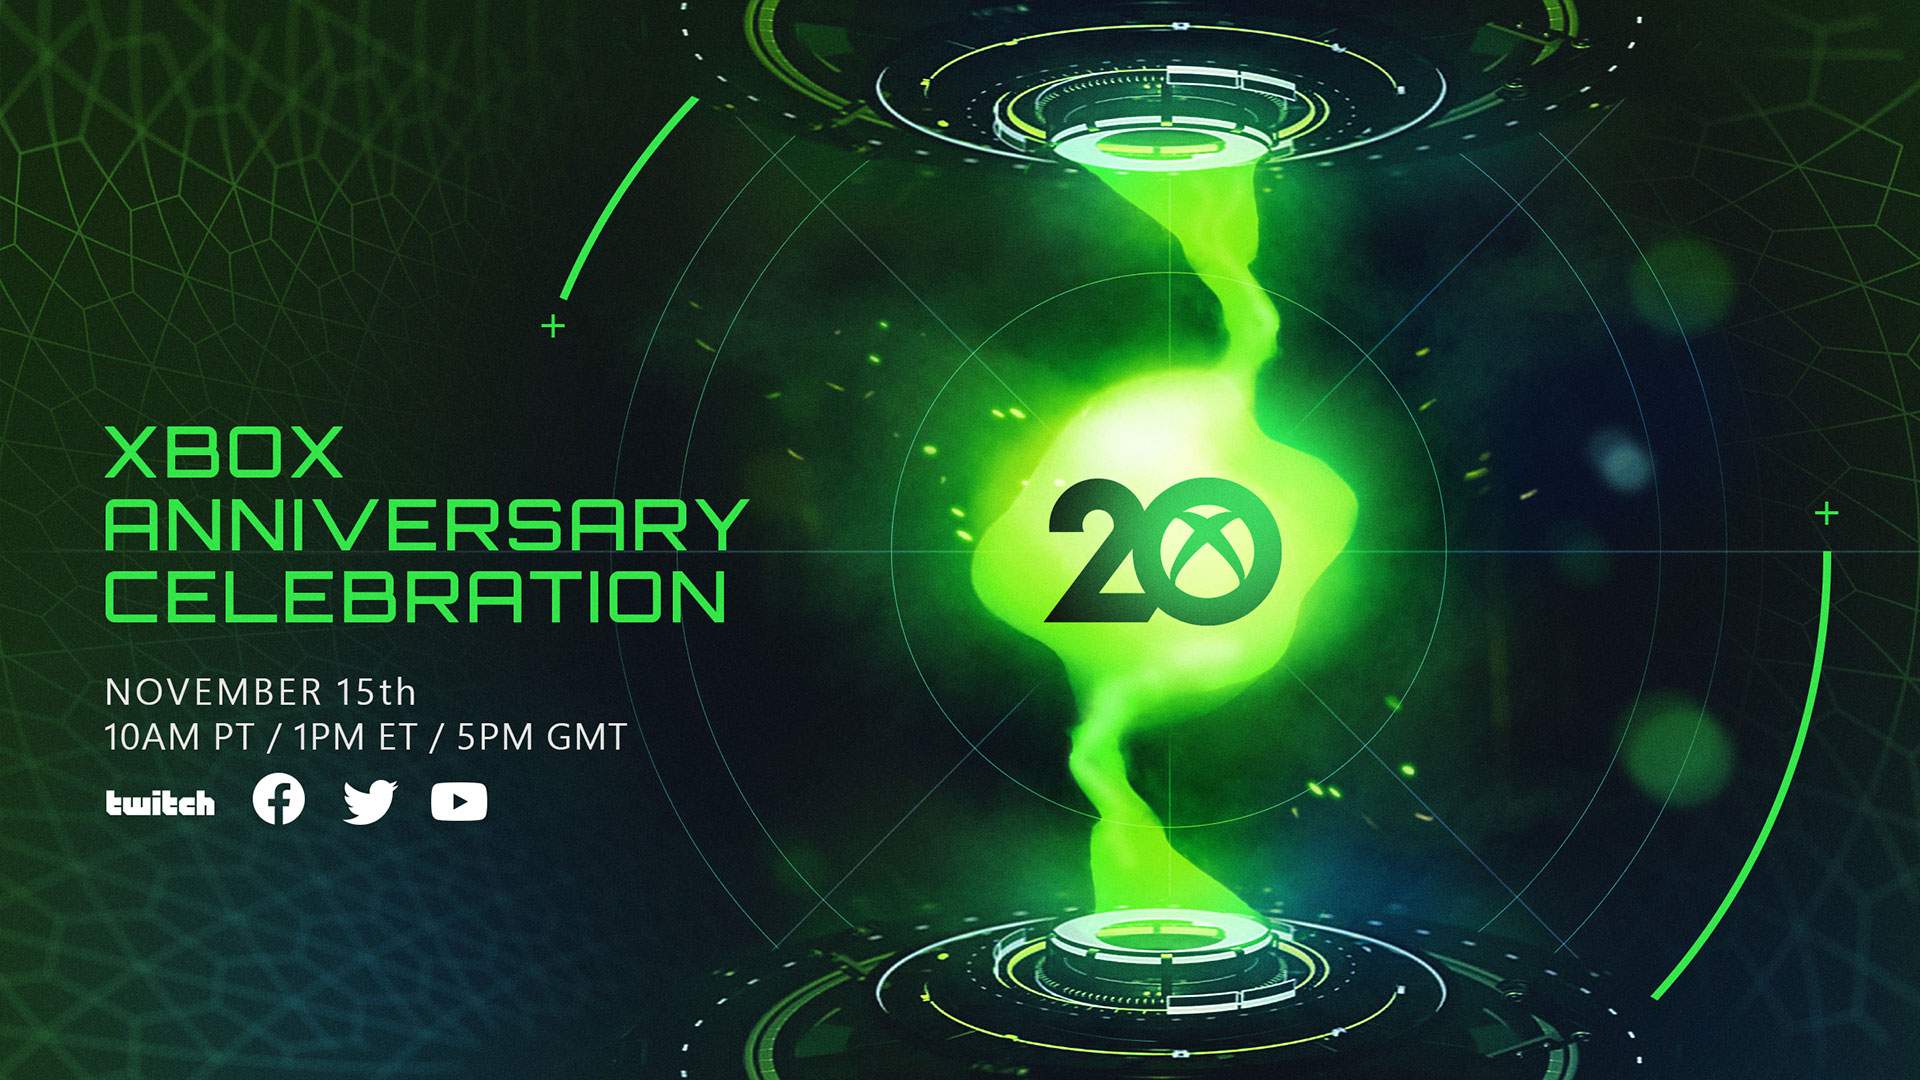 Xbox 20th Anniversary Celebration digital broadcast set for November 15